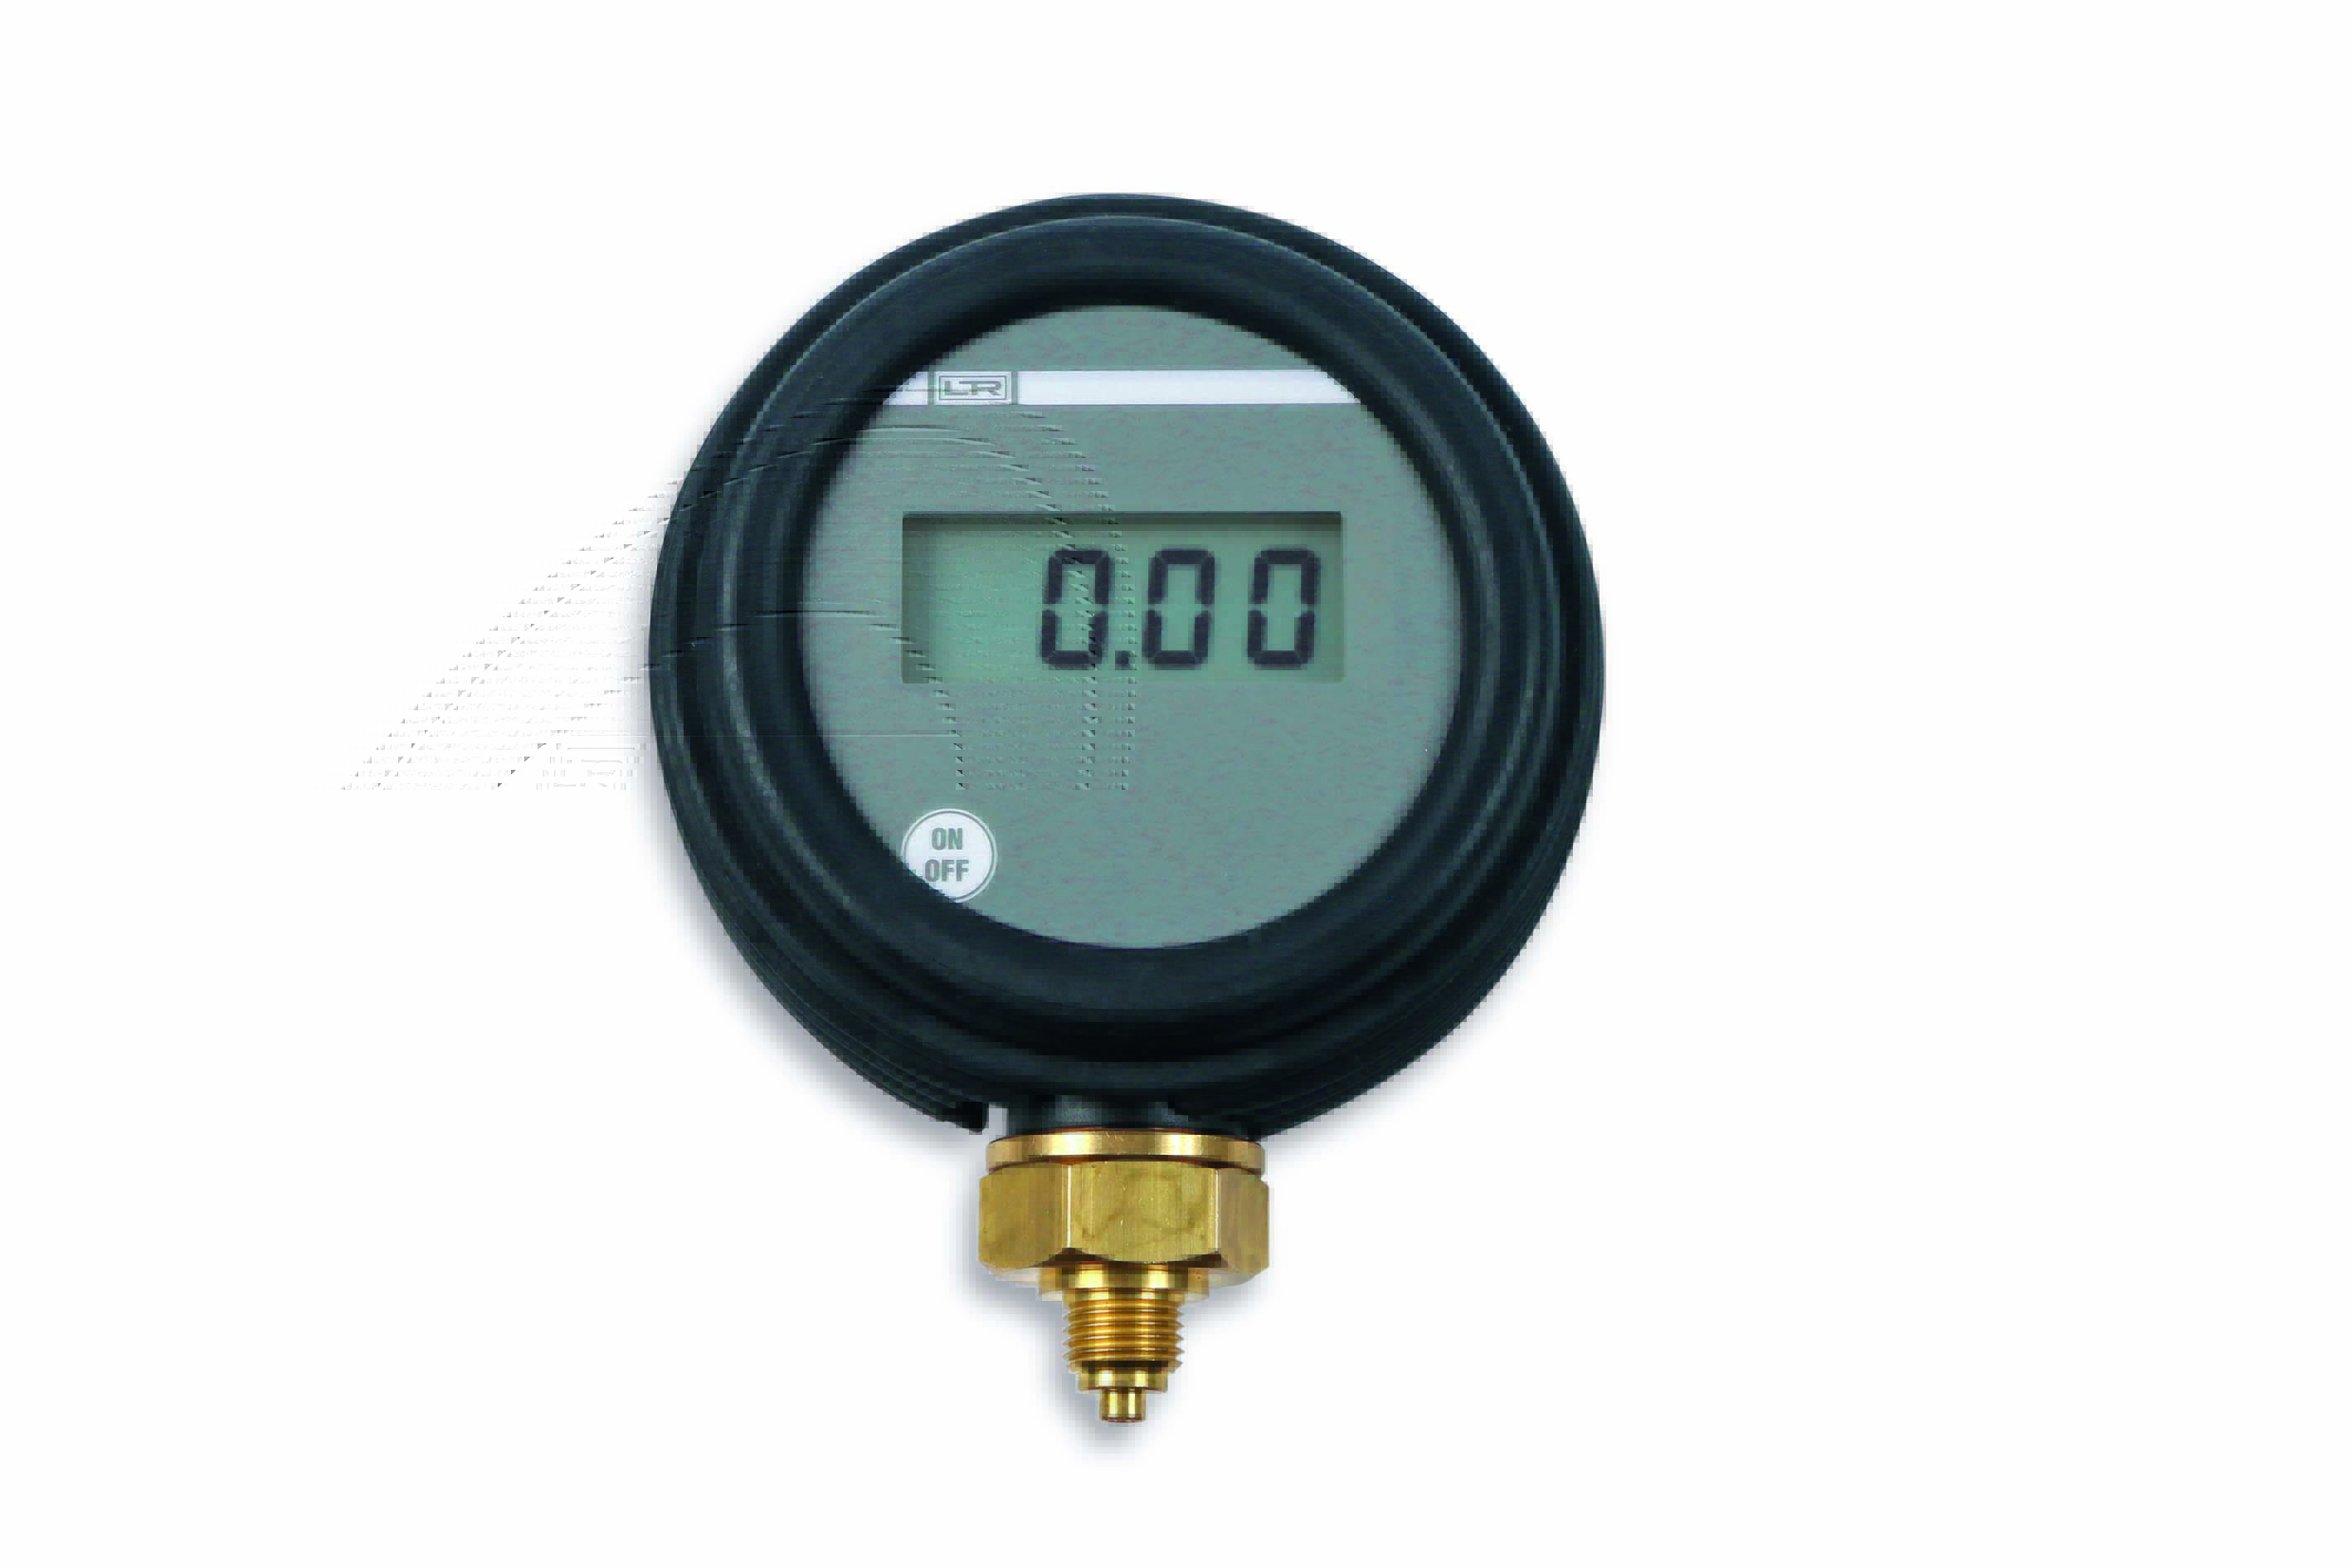  Digital Pressure Measurement_Standard_60bar_LR Germany